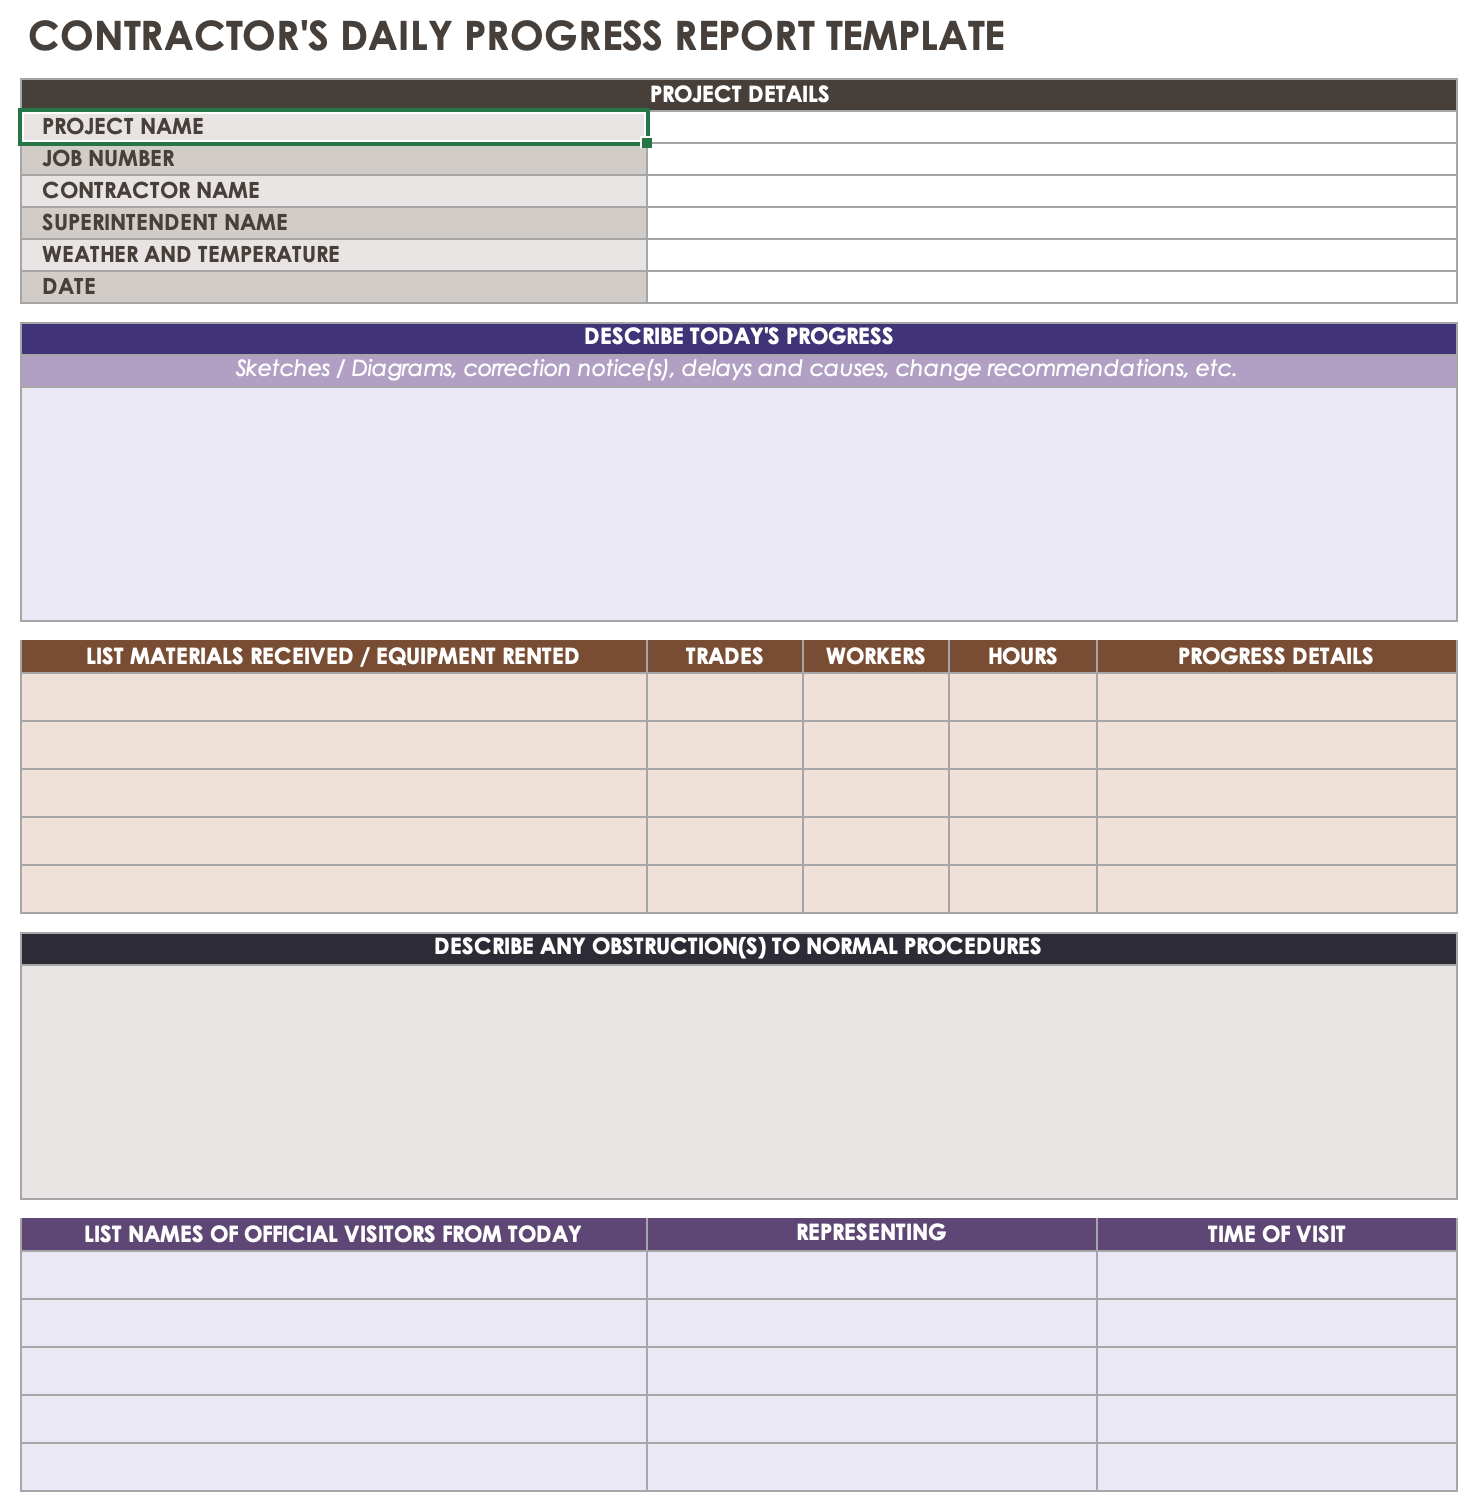 Free Daily Progress Report Templates  Smartsheet In Construction Daily Progress Report Template